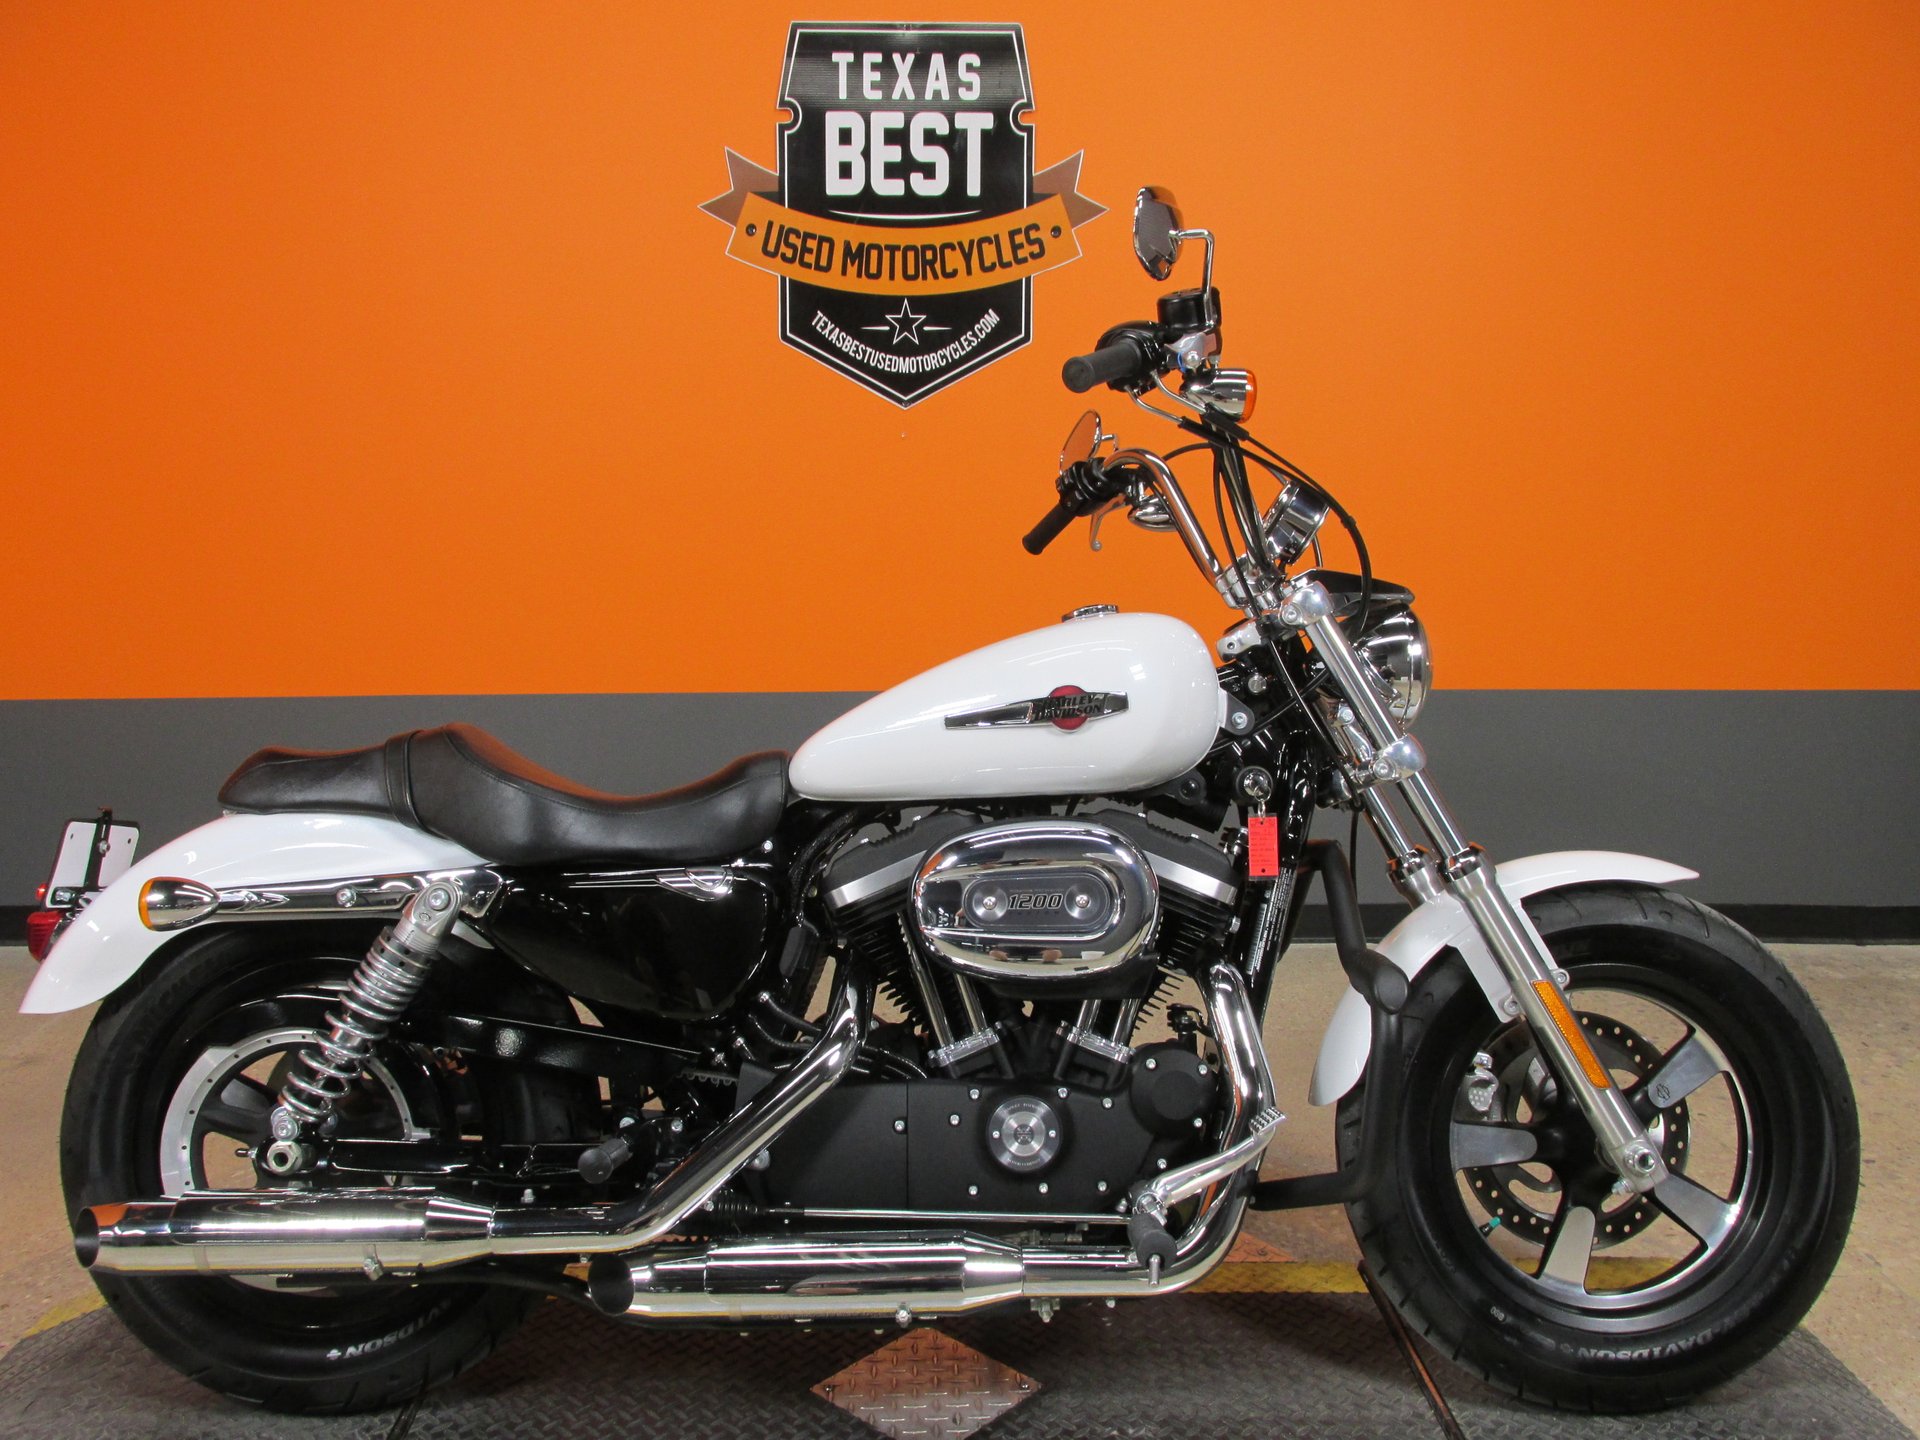 2016 Harley-Davidson Sportster 1200 | American Motorcycle Trading Company -  Used Harley Davidson Motorcycles